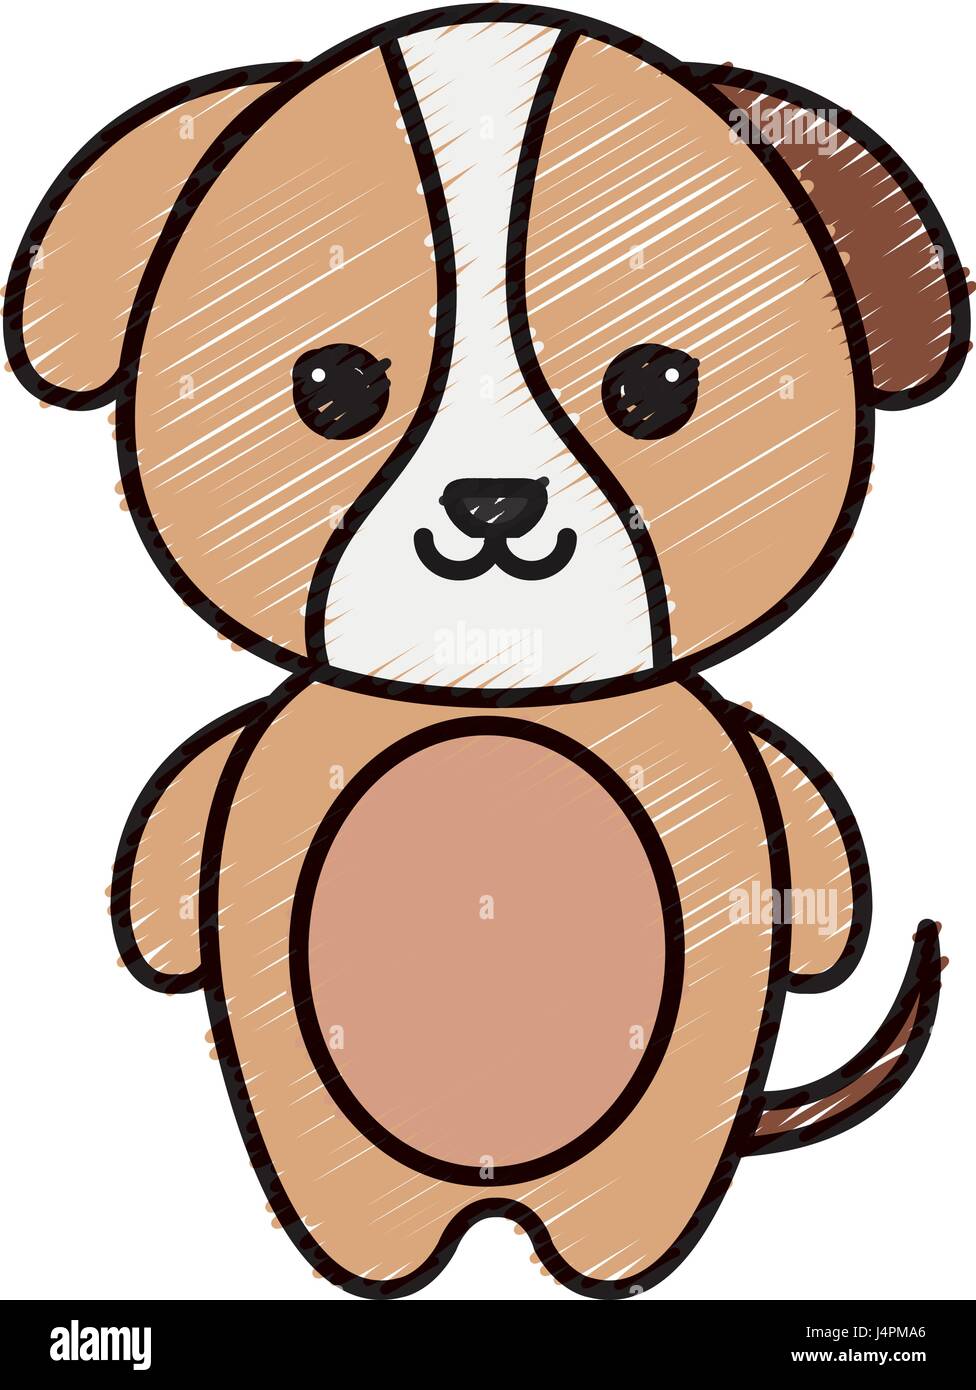 süß und zart Hund Kawaii-Stil Stock-Vektorgrafik - Alamy